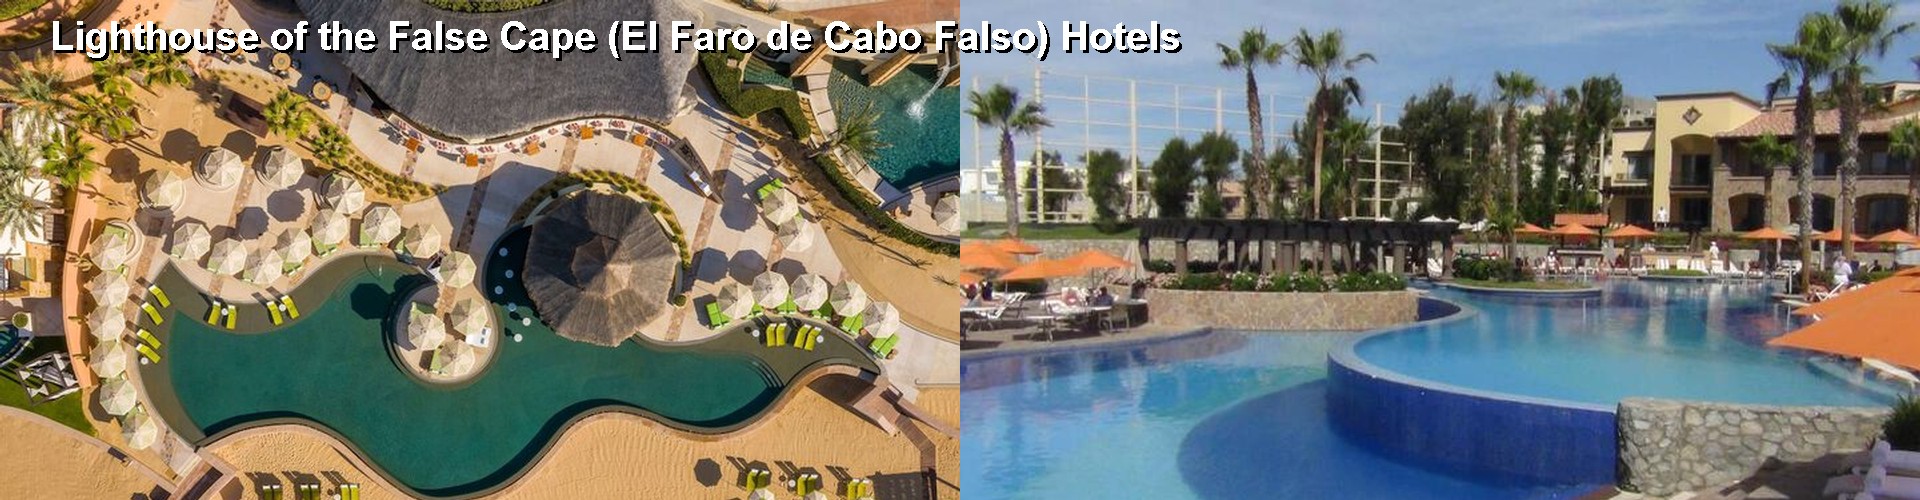 5 Best Hotels near Lighthouse of the False Cape (El Faro de Cabo Falso)